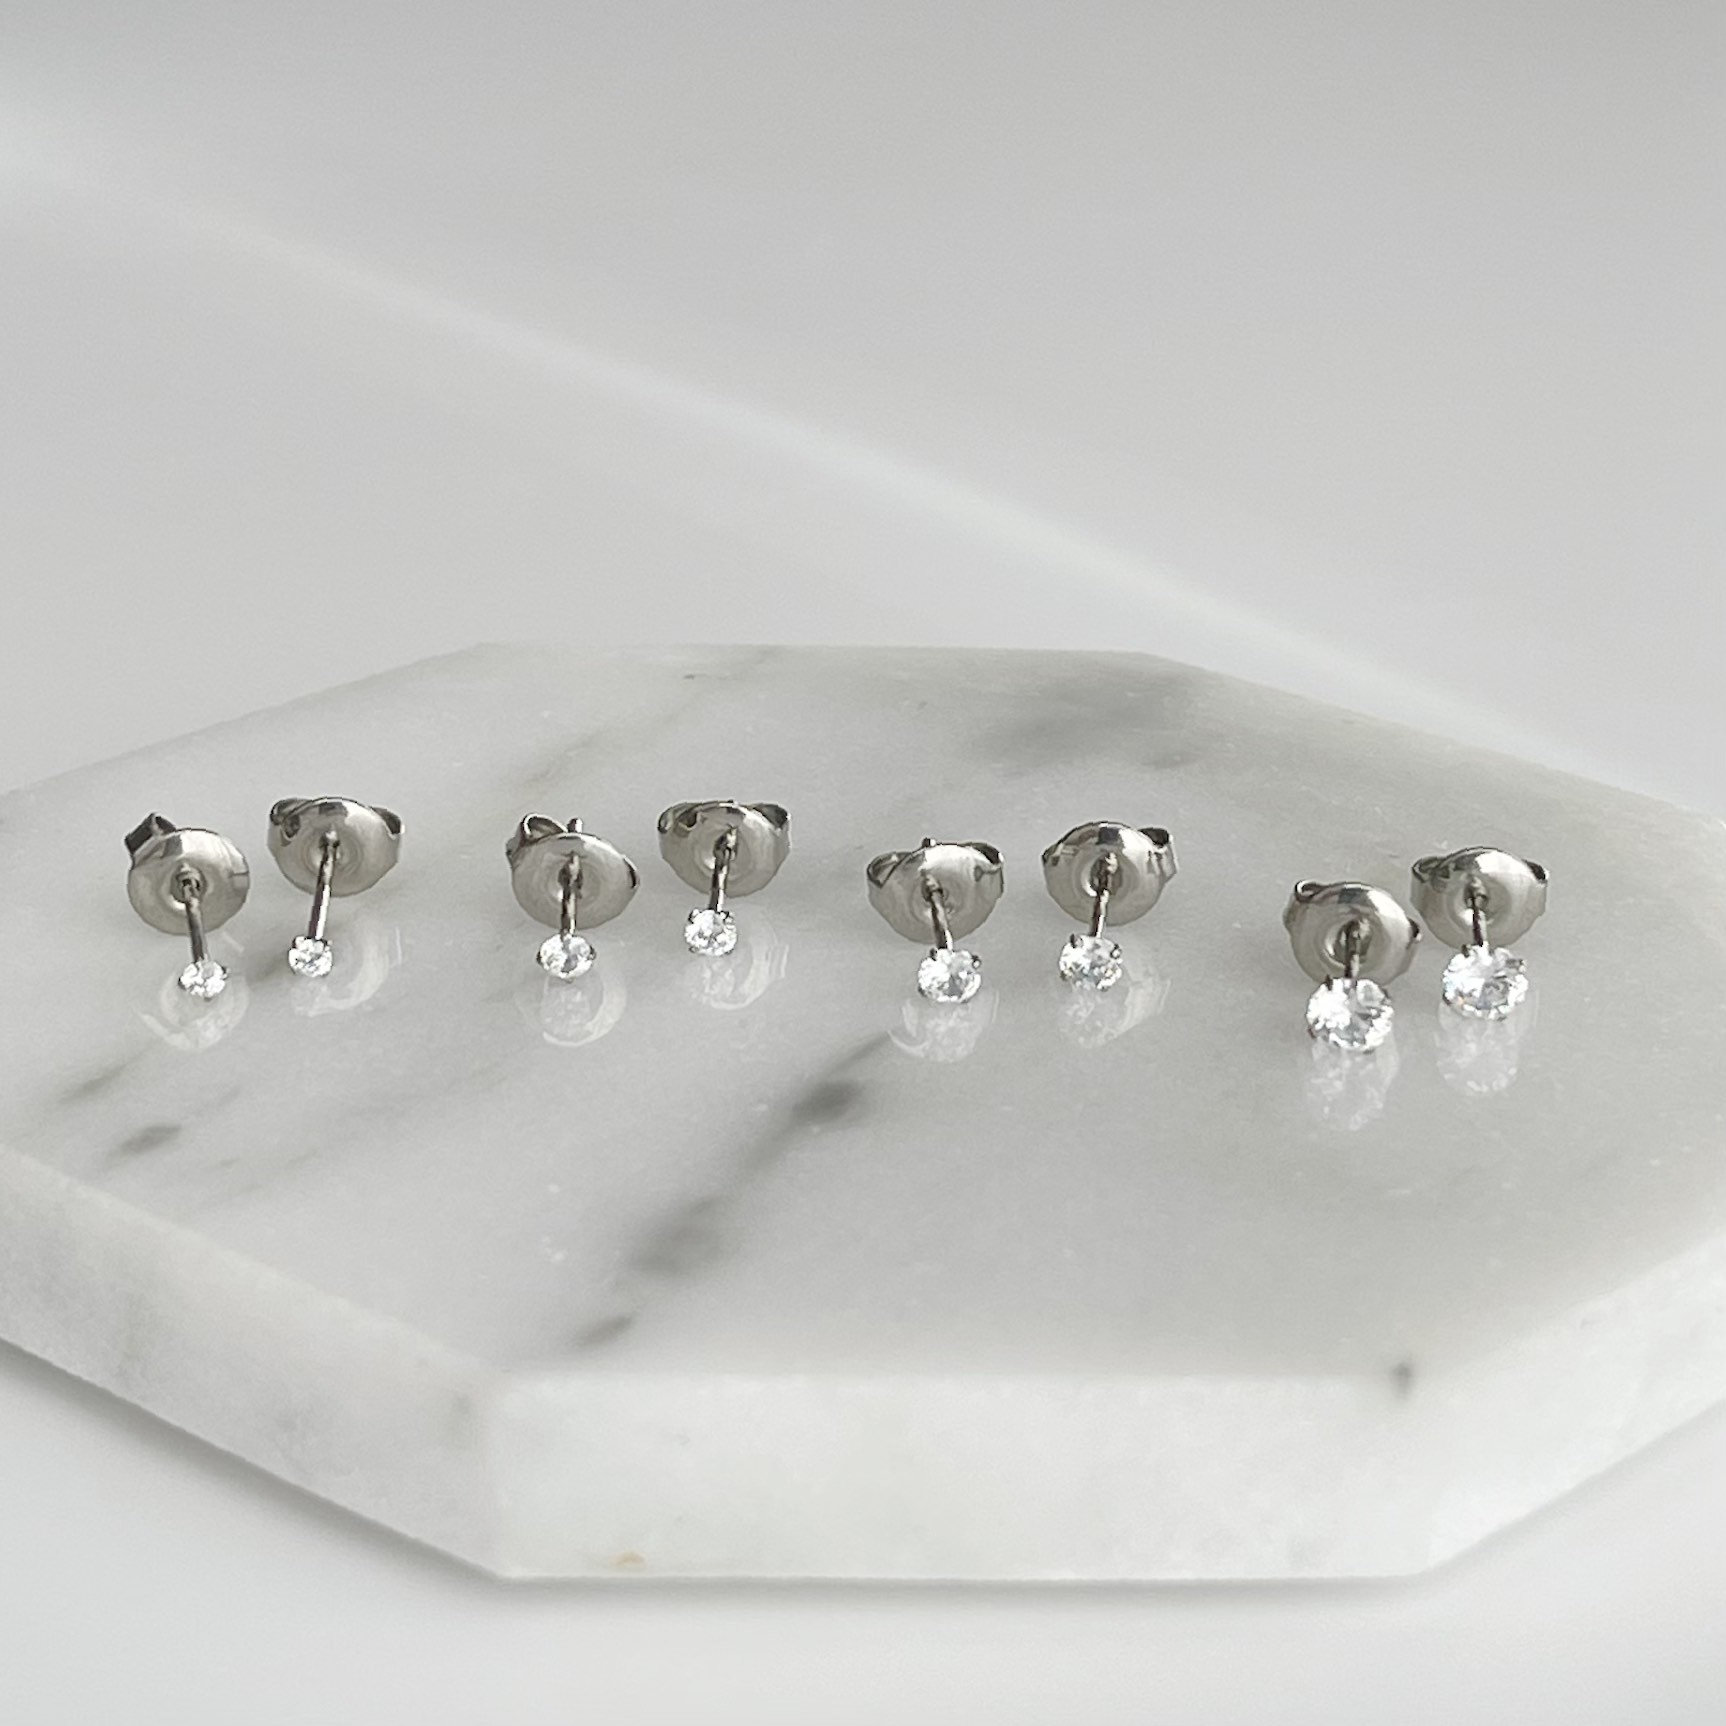 Domino Handmade Tiny Clear Cz 2mm Stud Earring Zircon Ear Stud